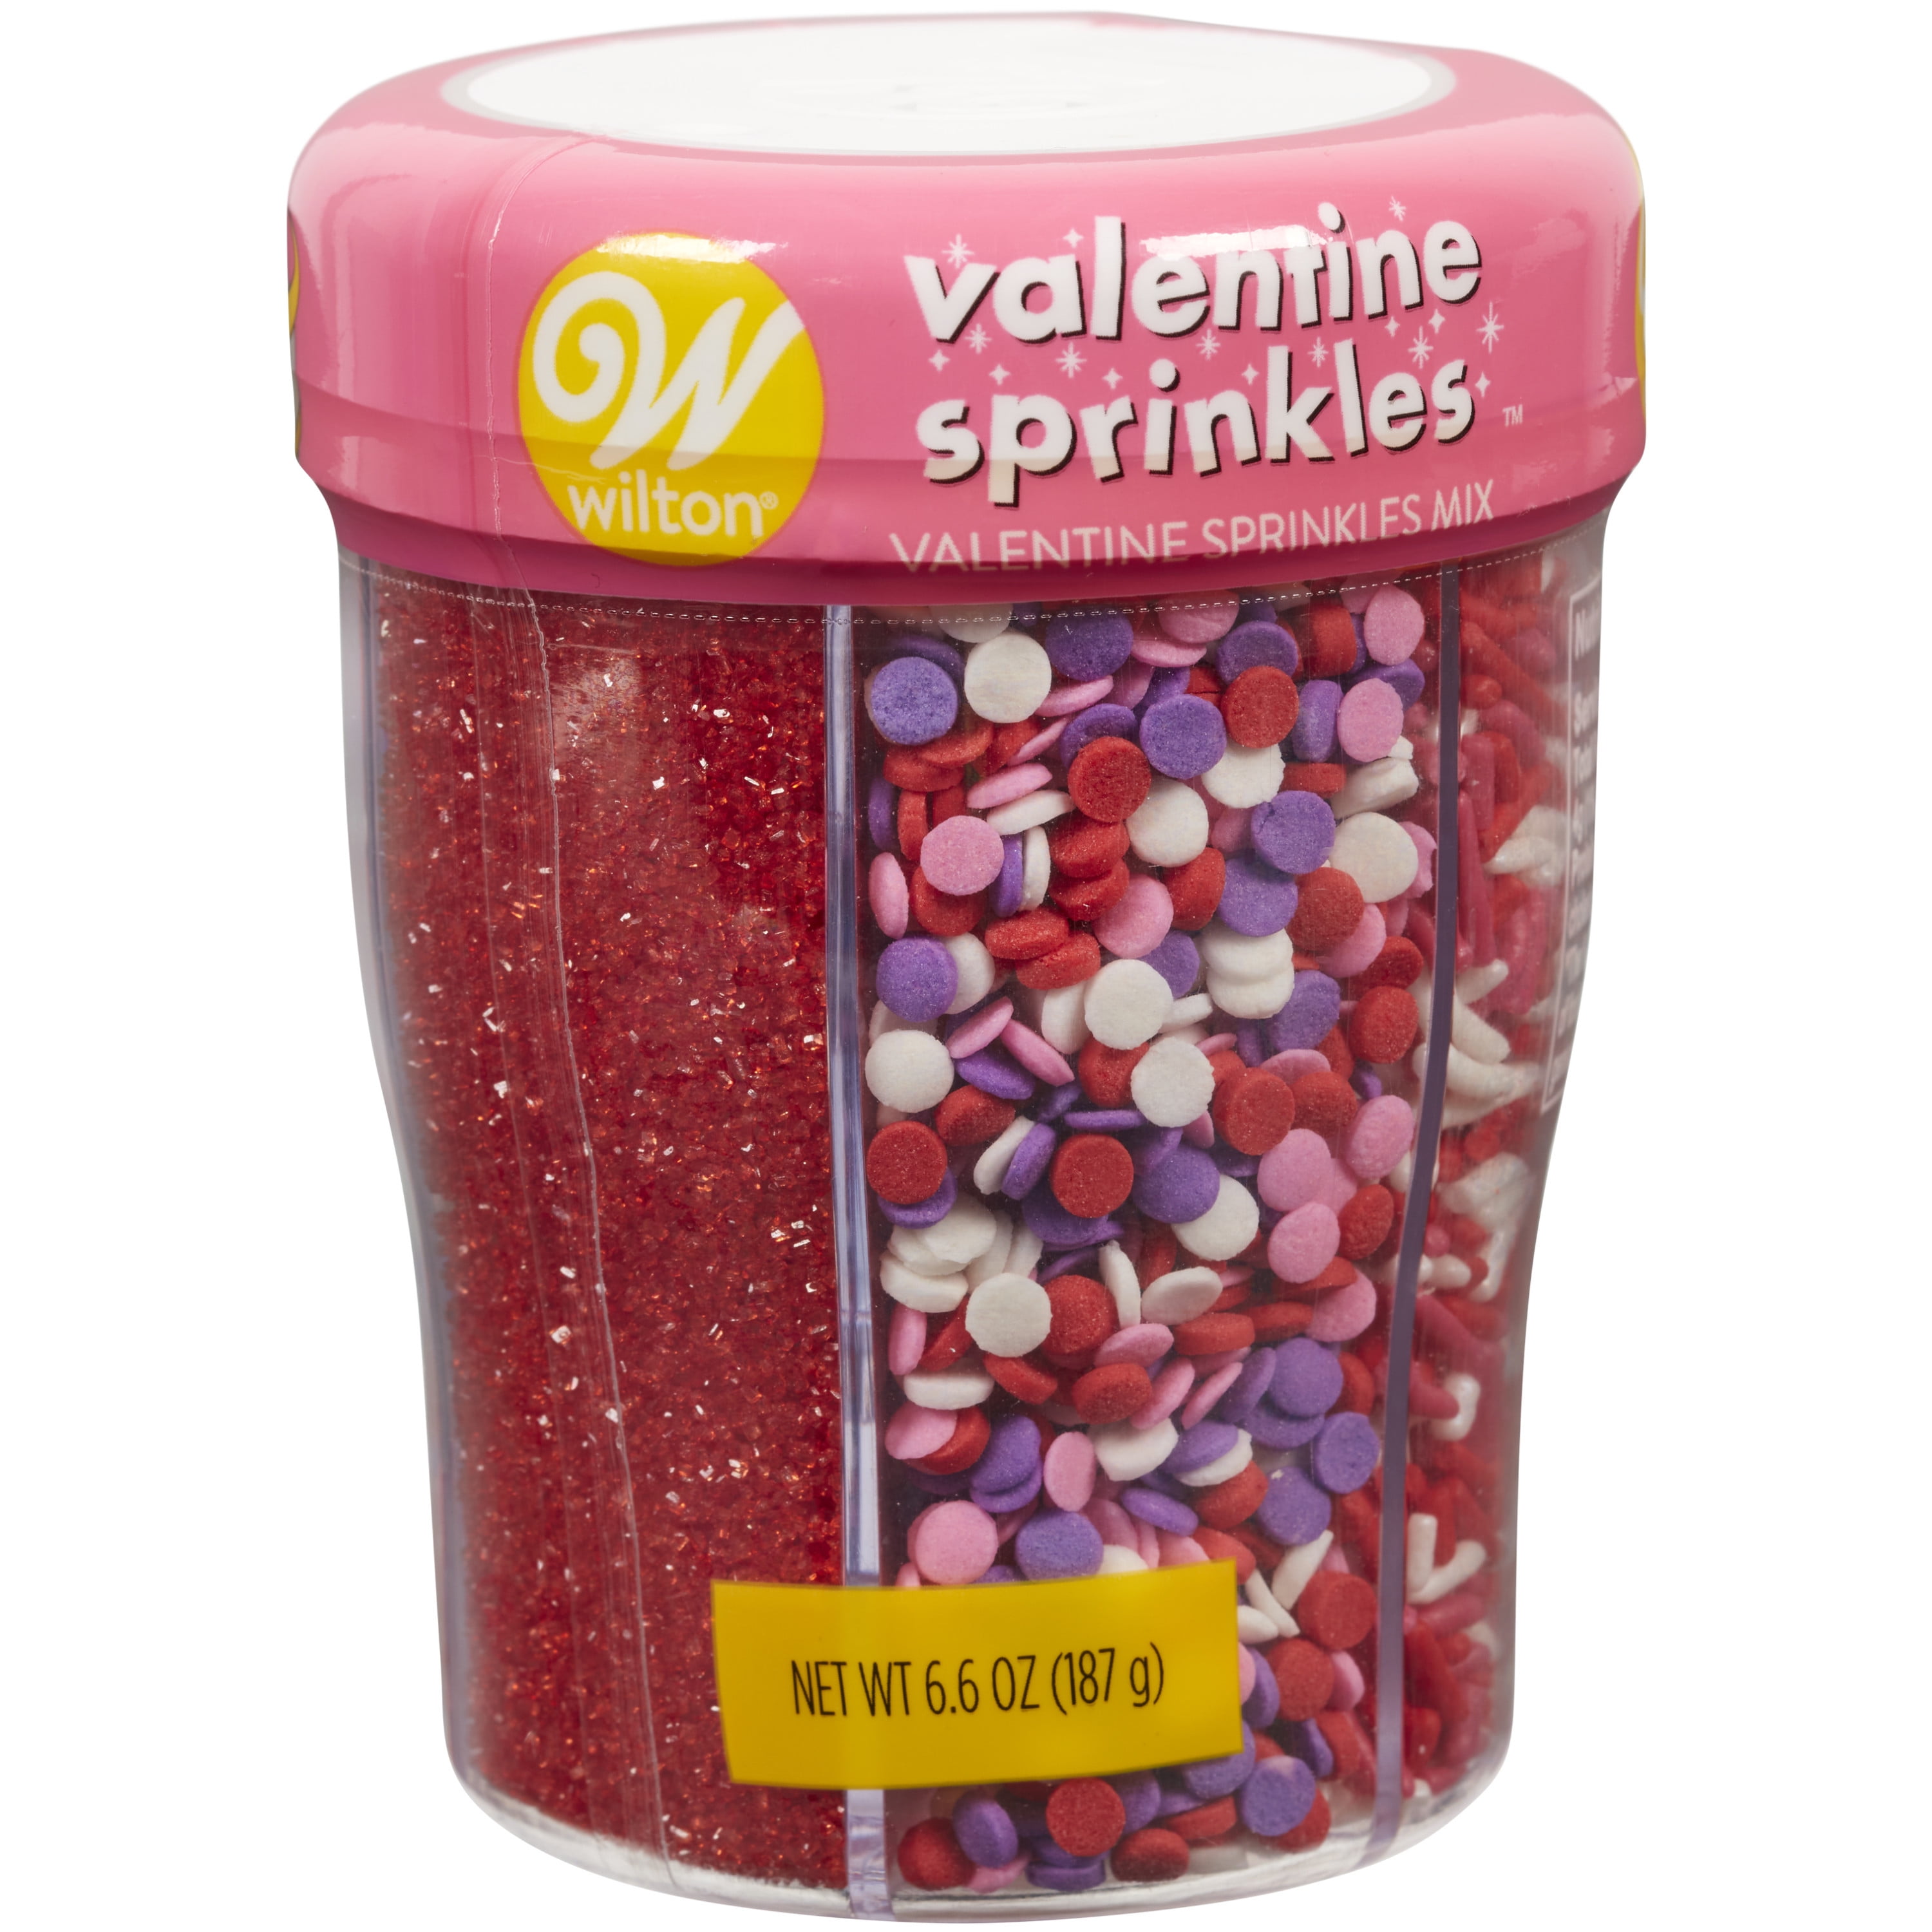 Valentine sprinkles